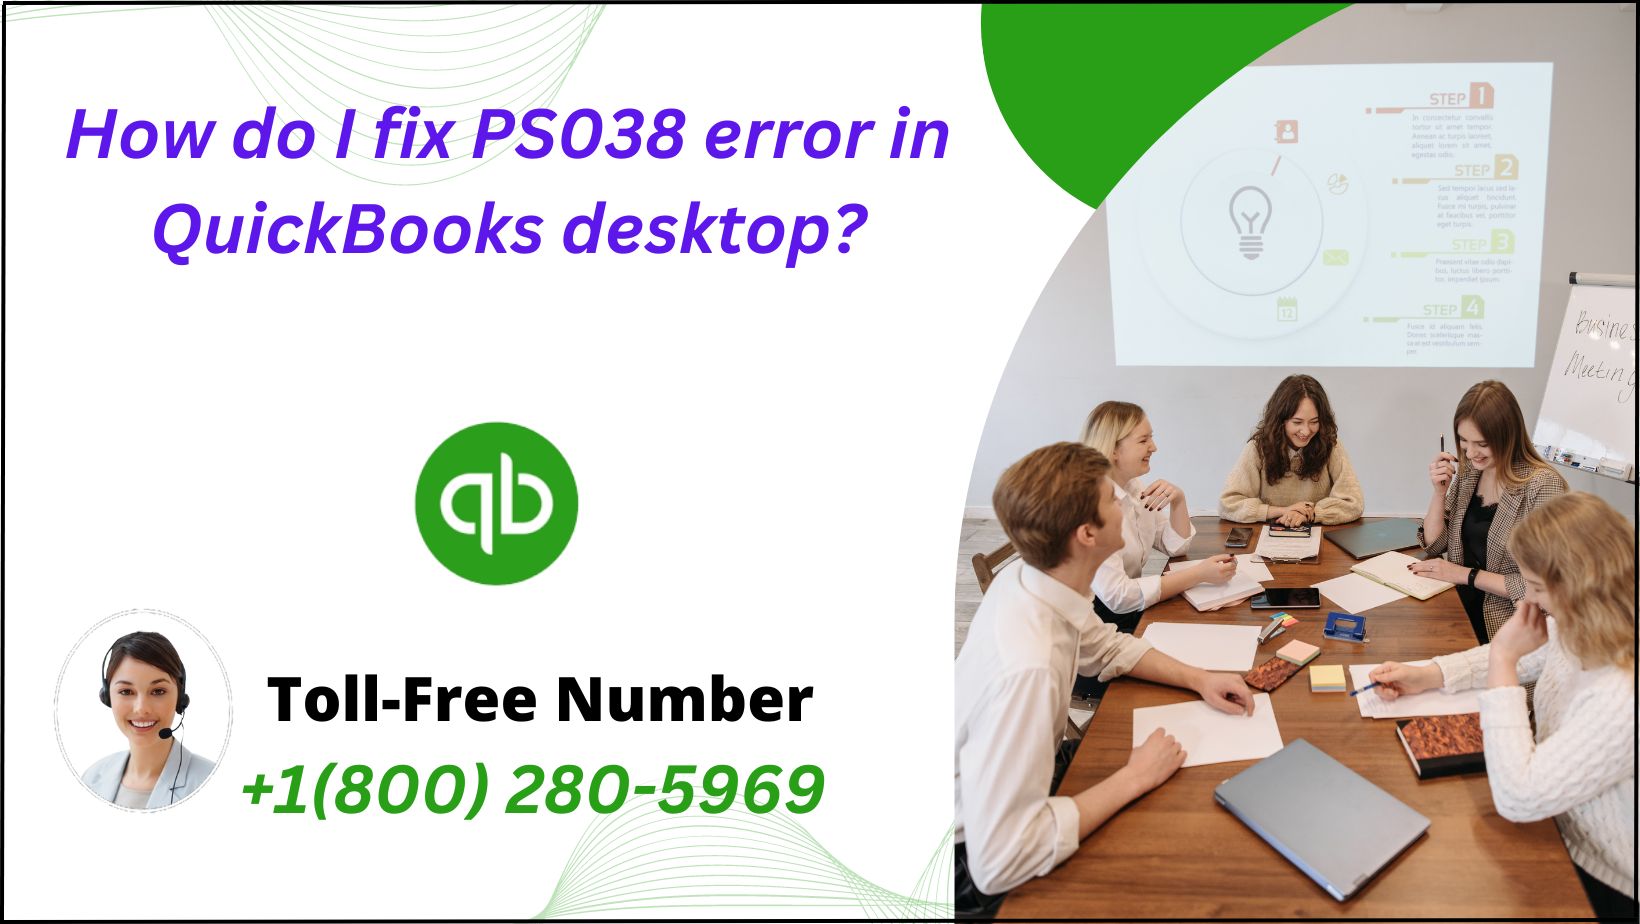 fix PS038 error in QuickBooks desktop?